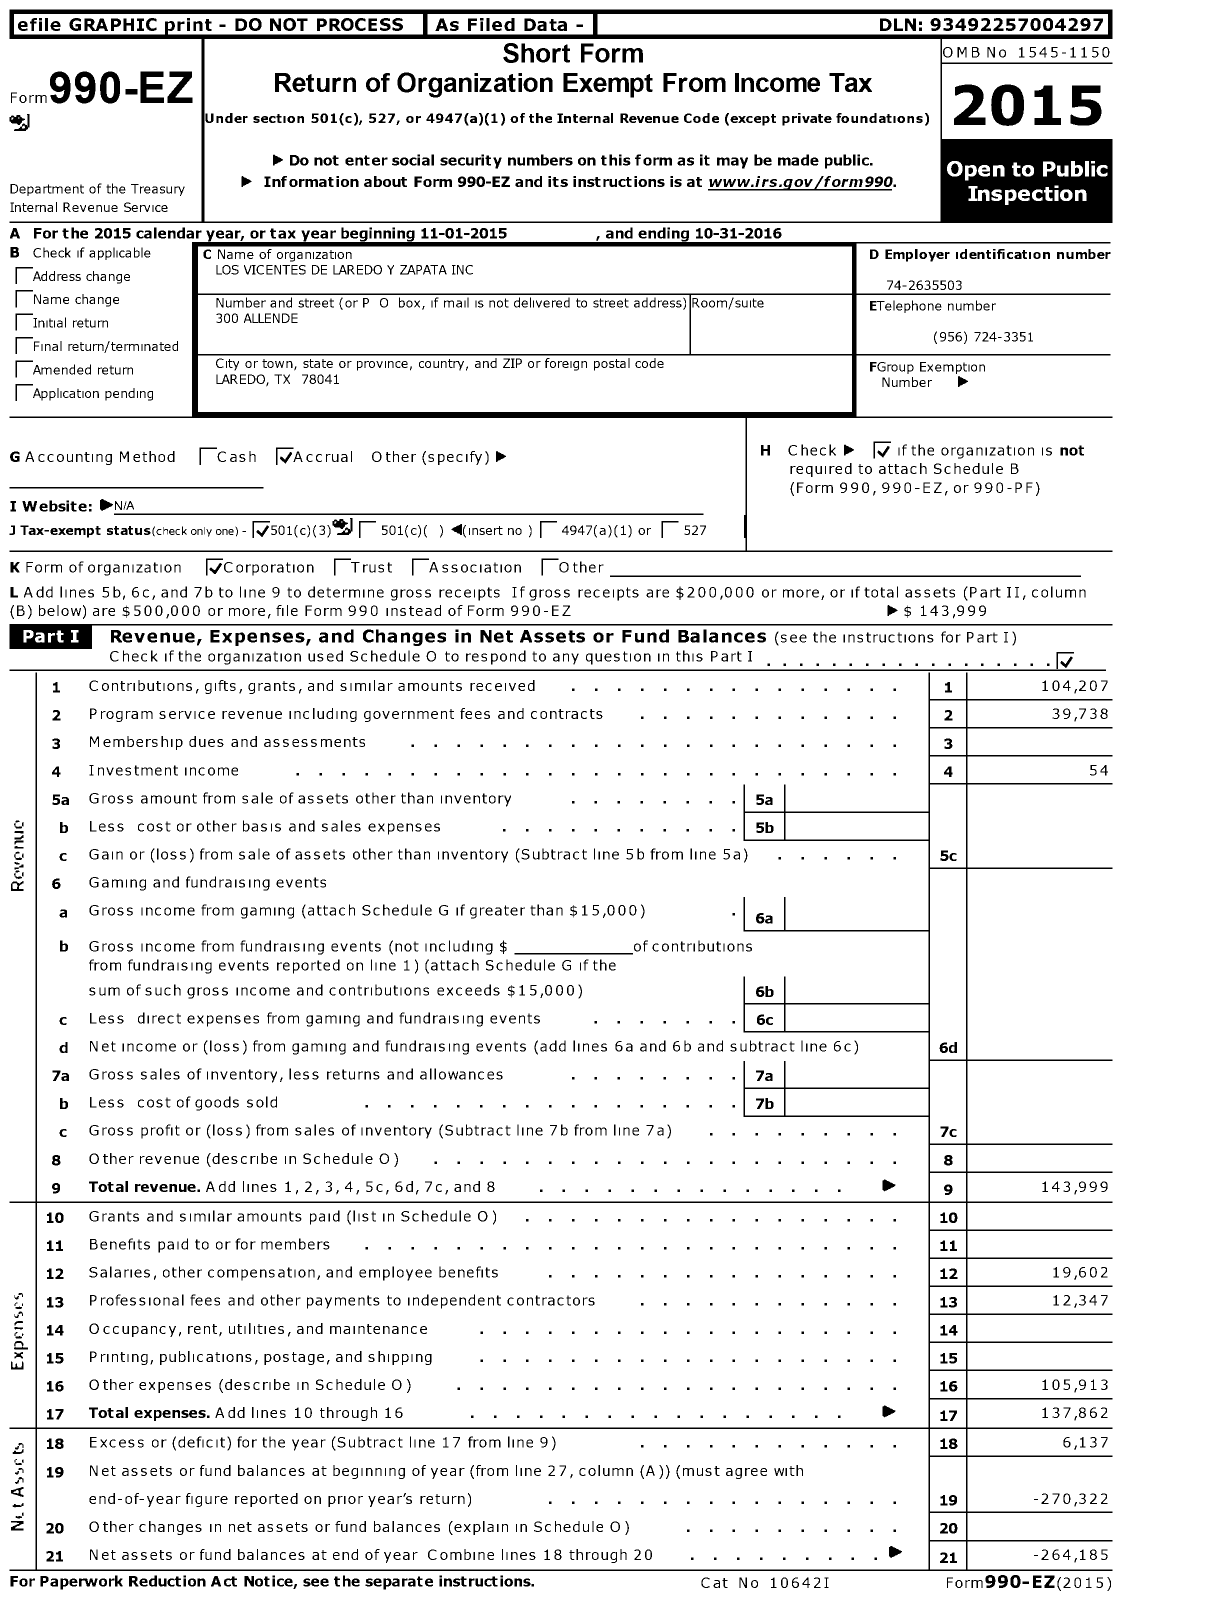 Image of first page of 2015 Form 990EZ for Los Vicentes de Laredo Y Zapata